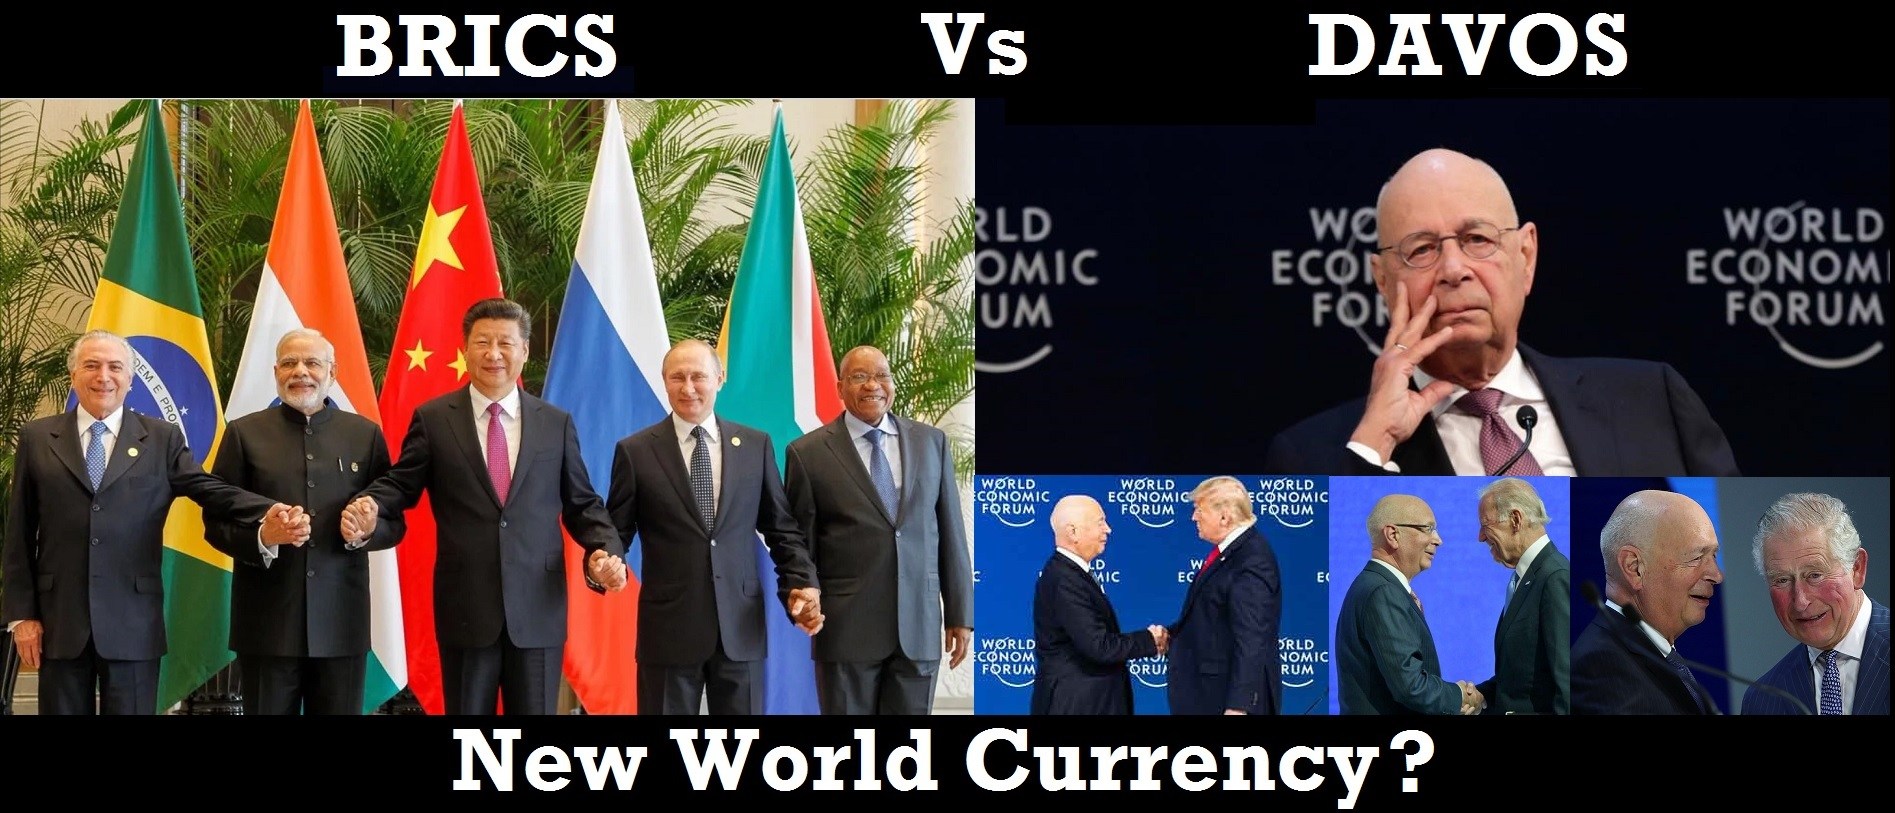 brics vs davos new world currency 2